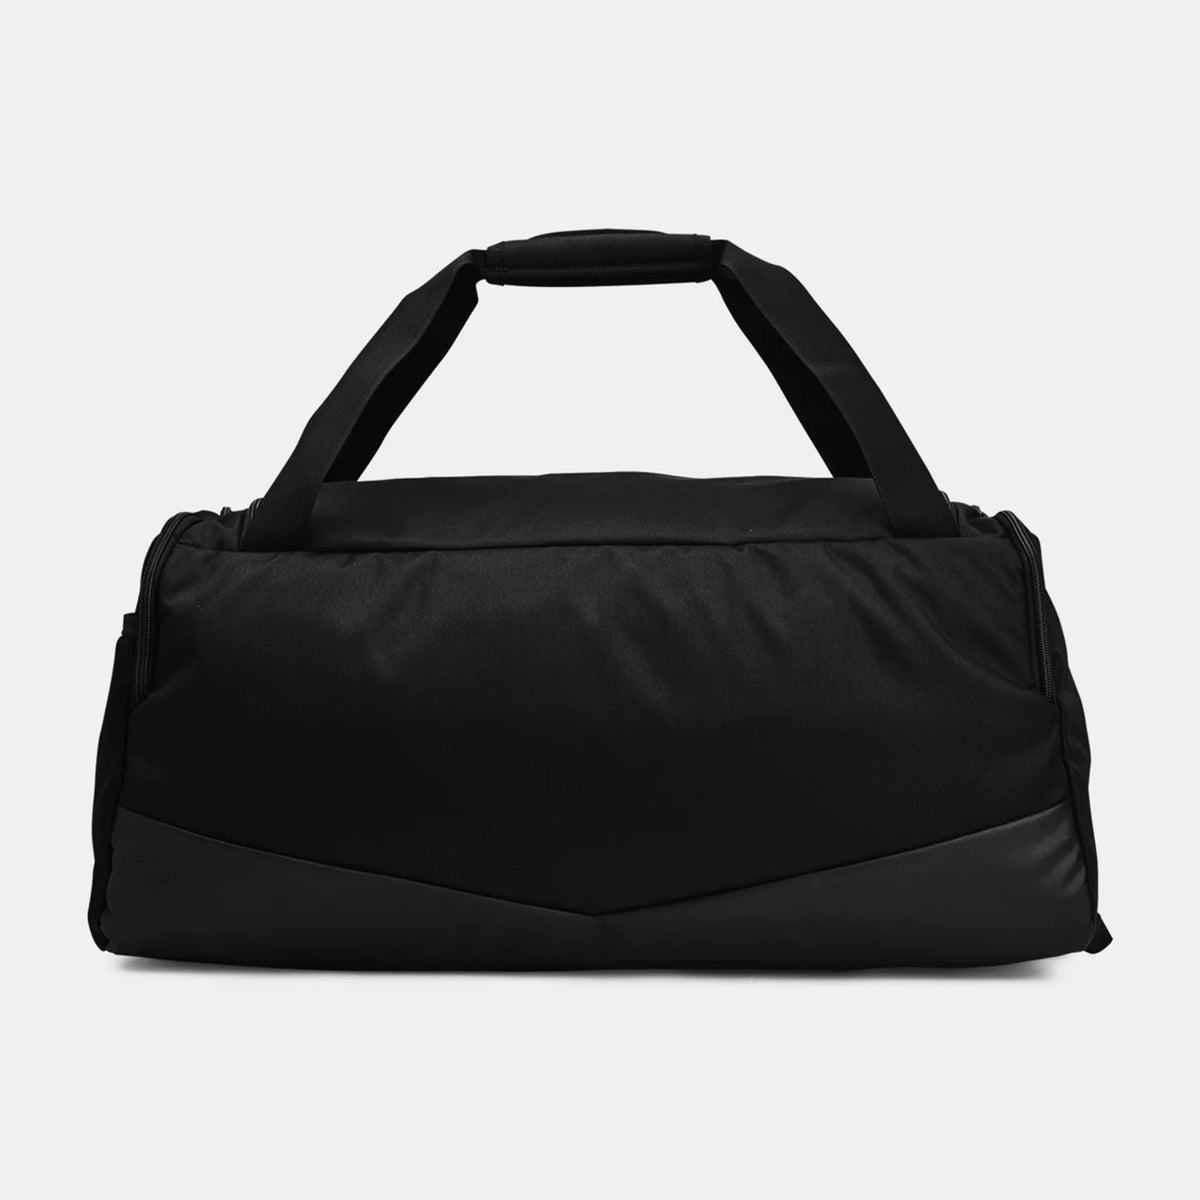 Under Armour Undeniable 5.0 Medium Duffel Bag: Black